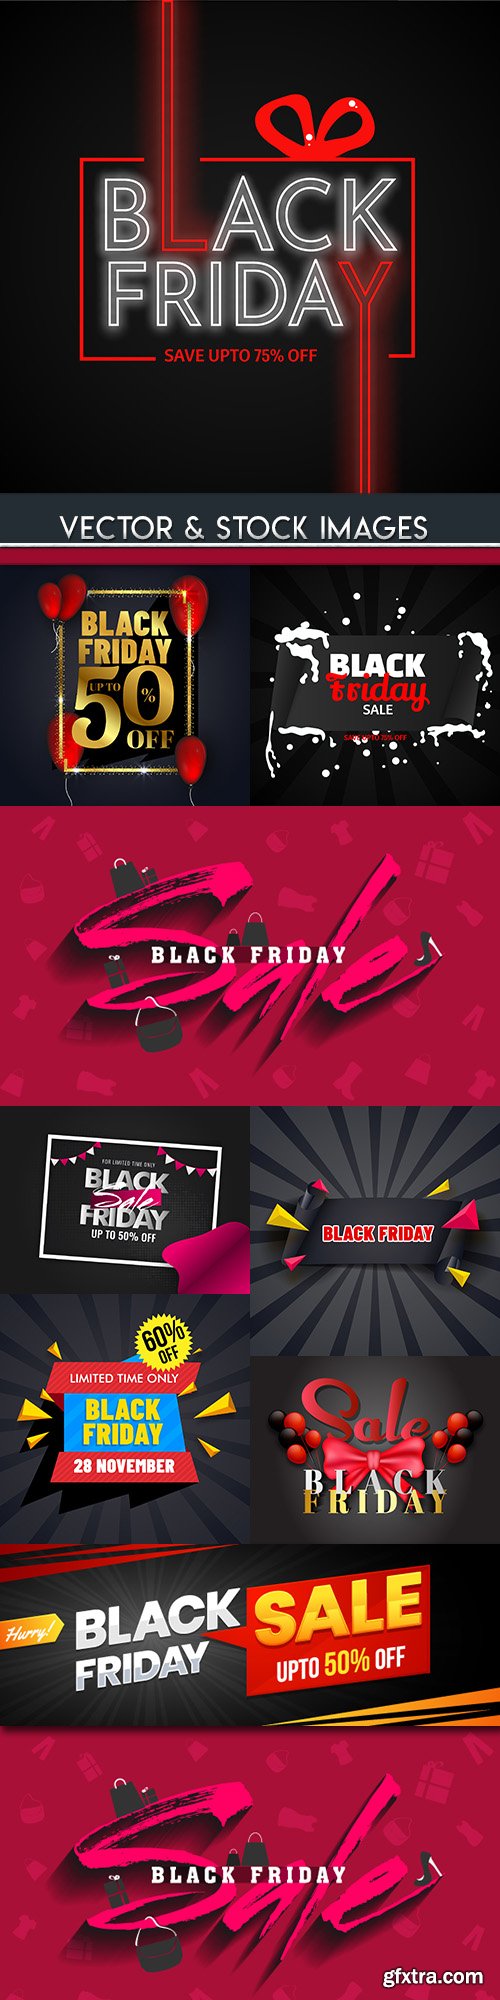 Black Friday and sale special design illustration 20